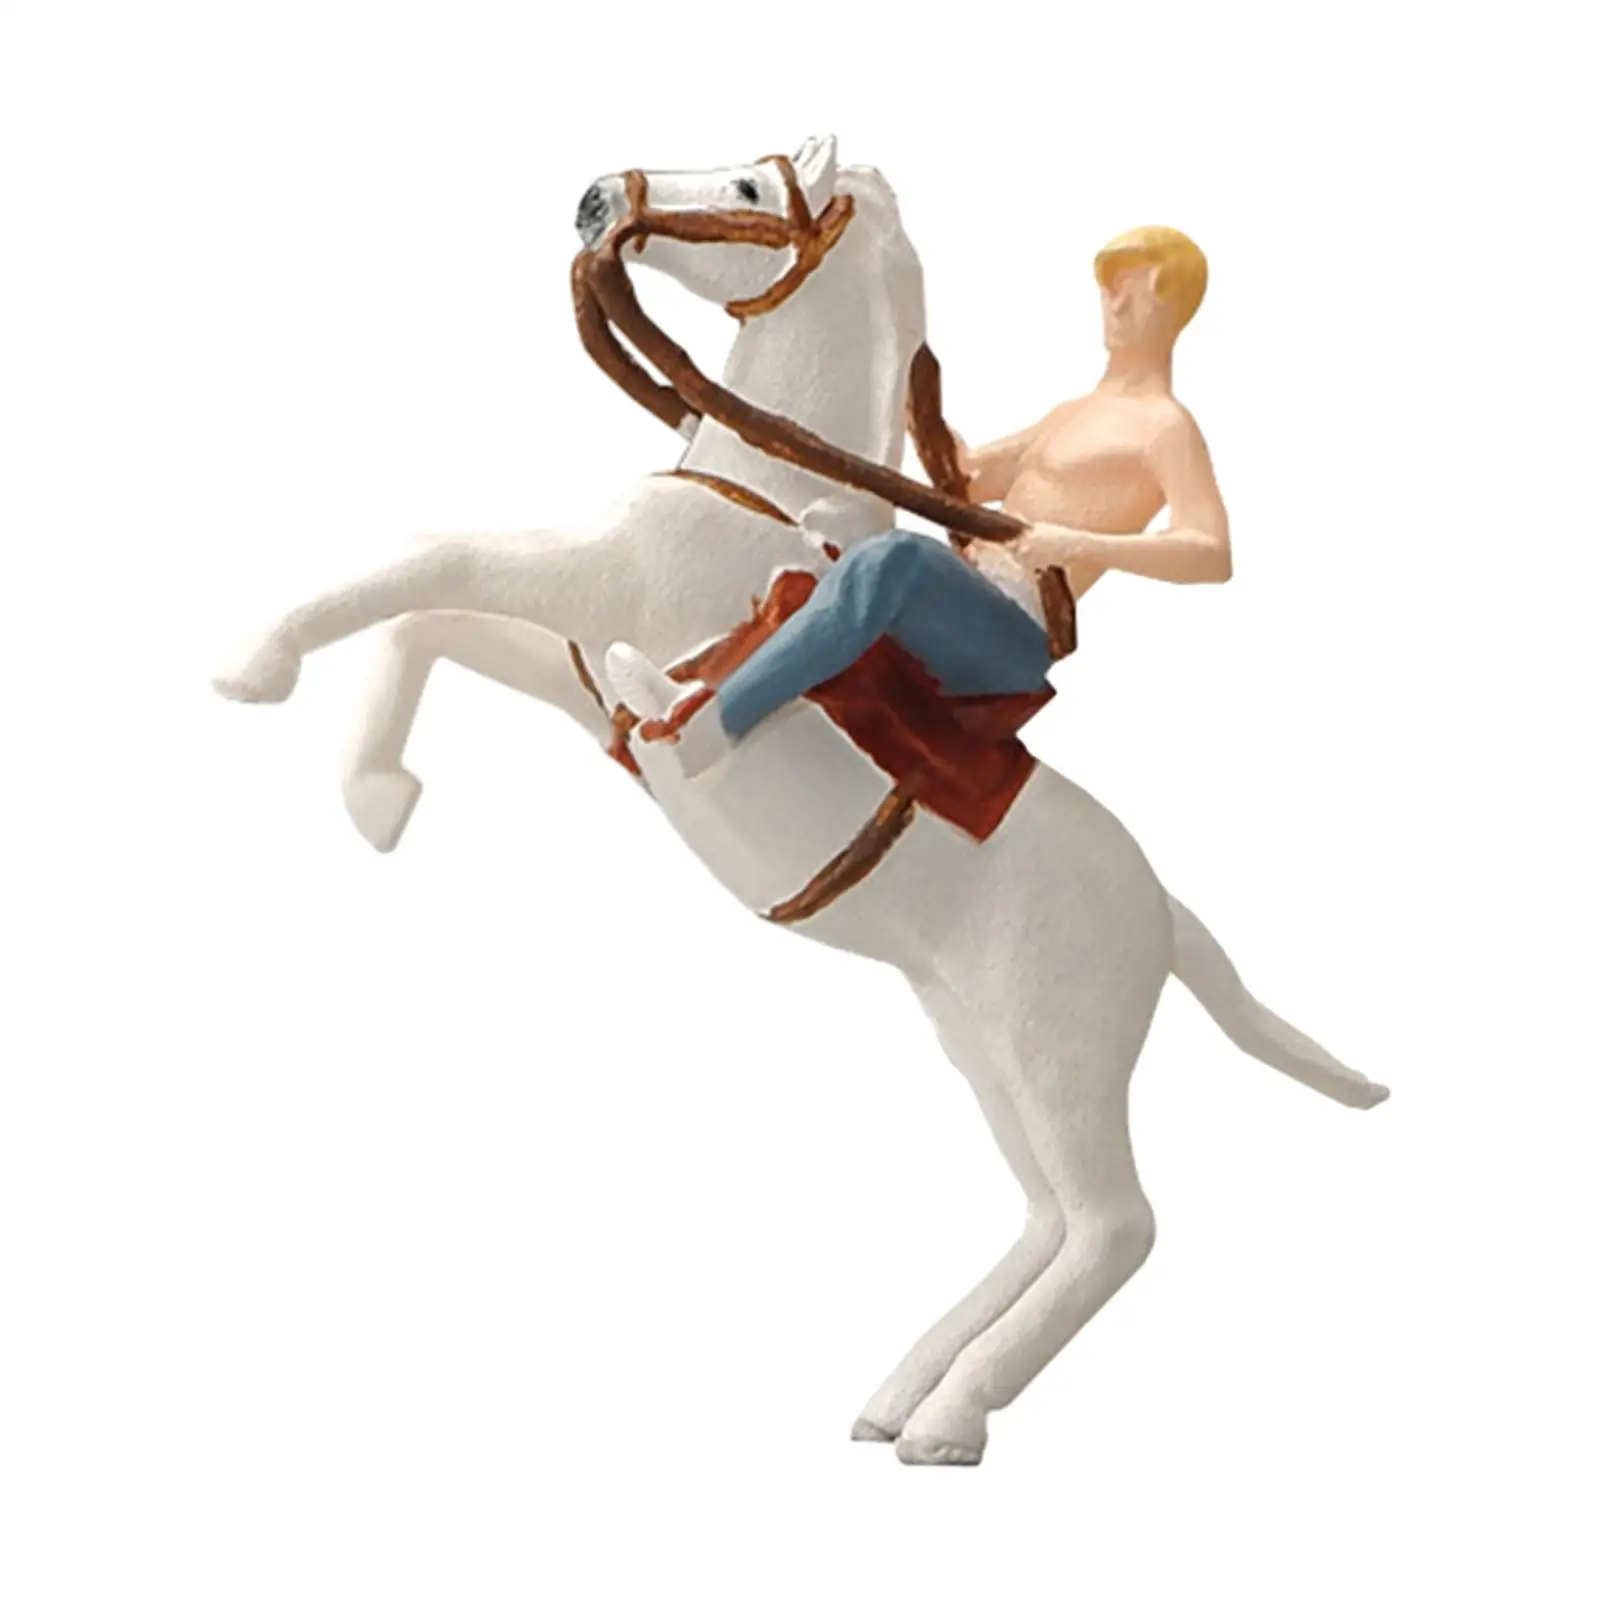 Diorama Scenery Figures Movie Props Miniature Resin Figurine for Desktop Ornament Model Trains Layout Decoration DIY Scene Decor